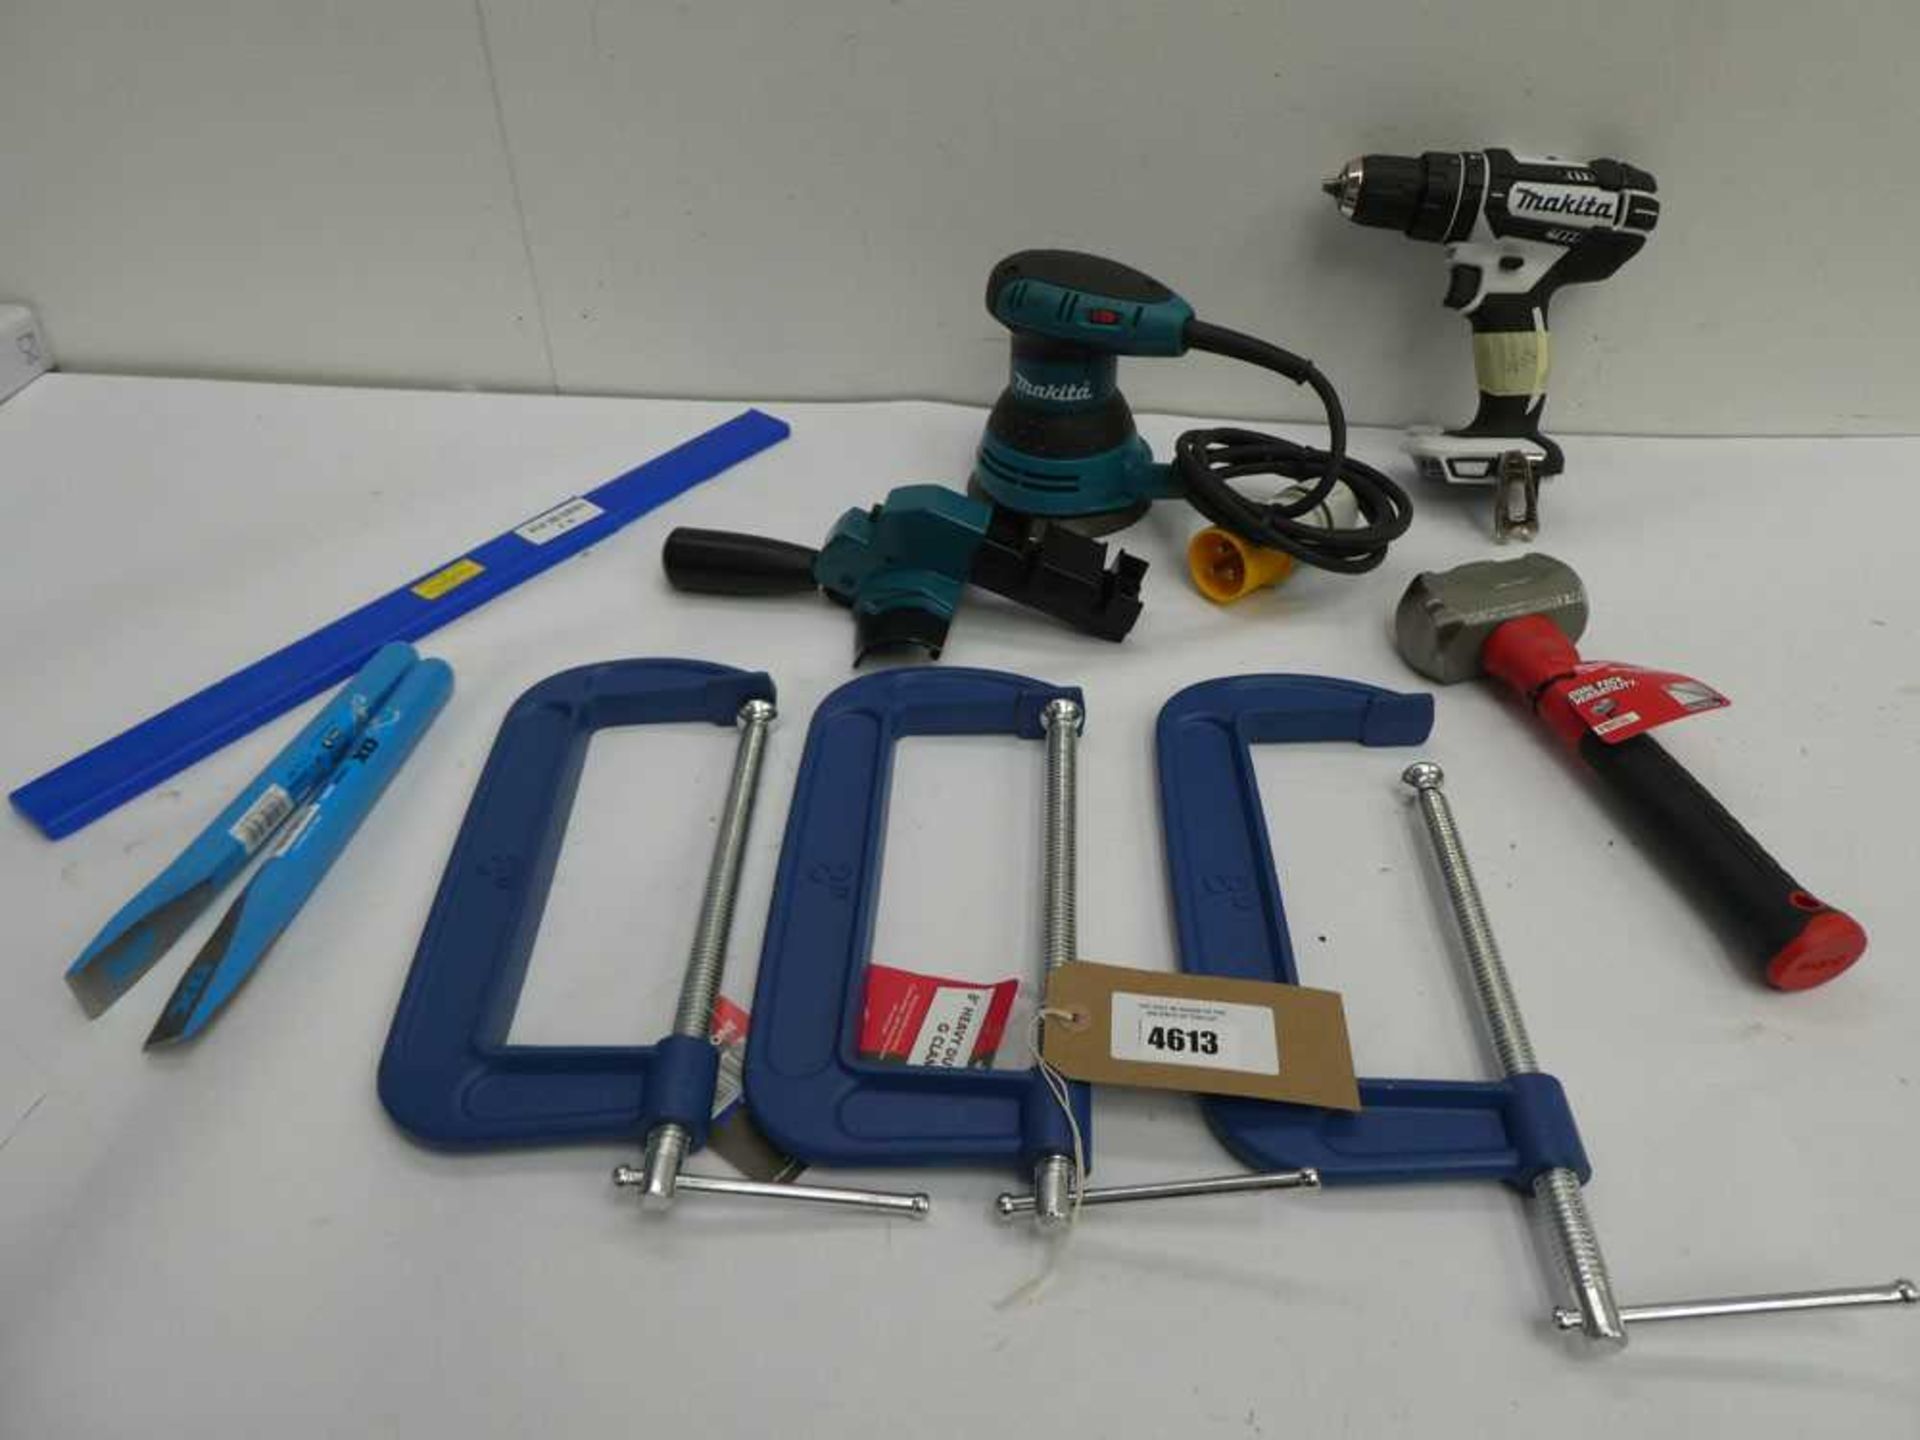 +VAT Makita drill body, Makita sander, Milwaukee club hammer, 8" G clamps, OX chisels etc